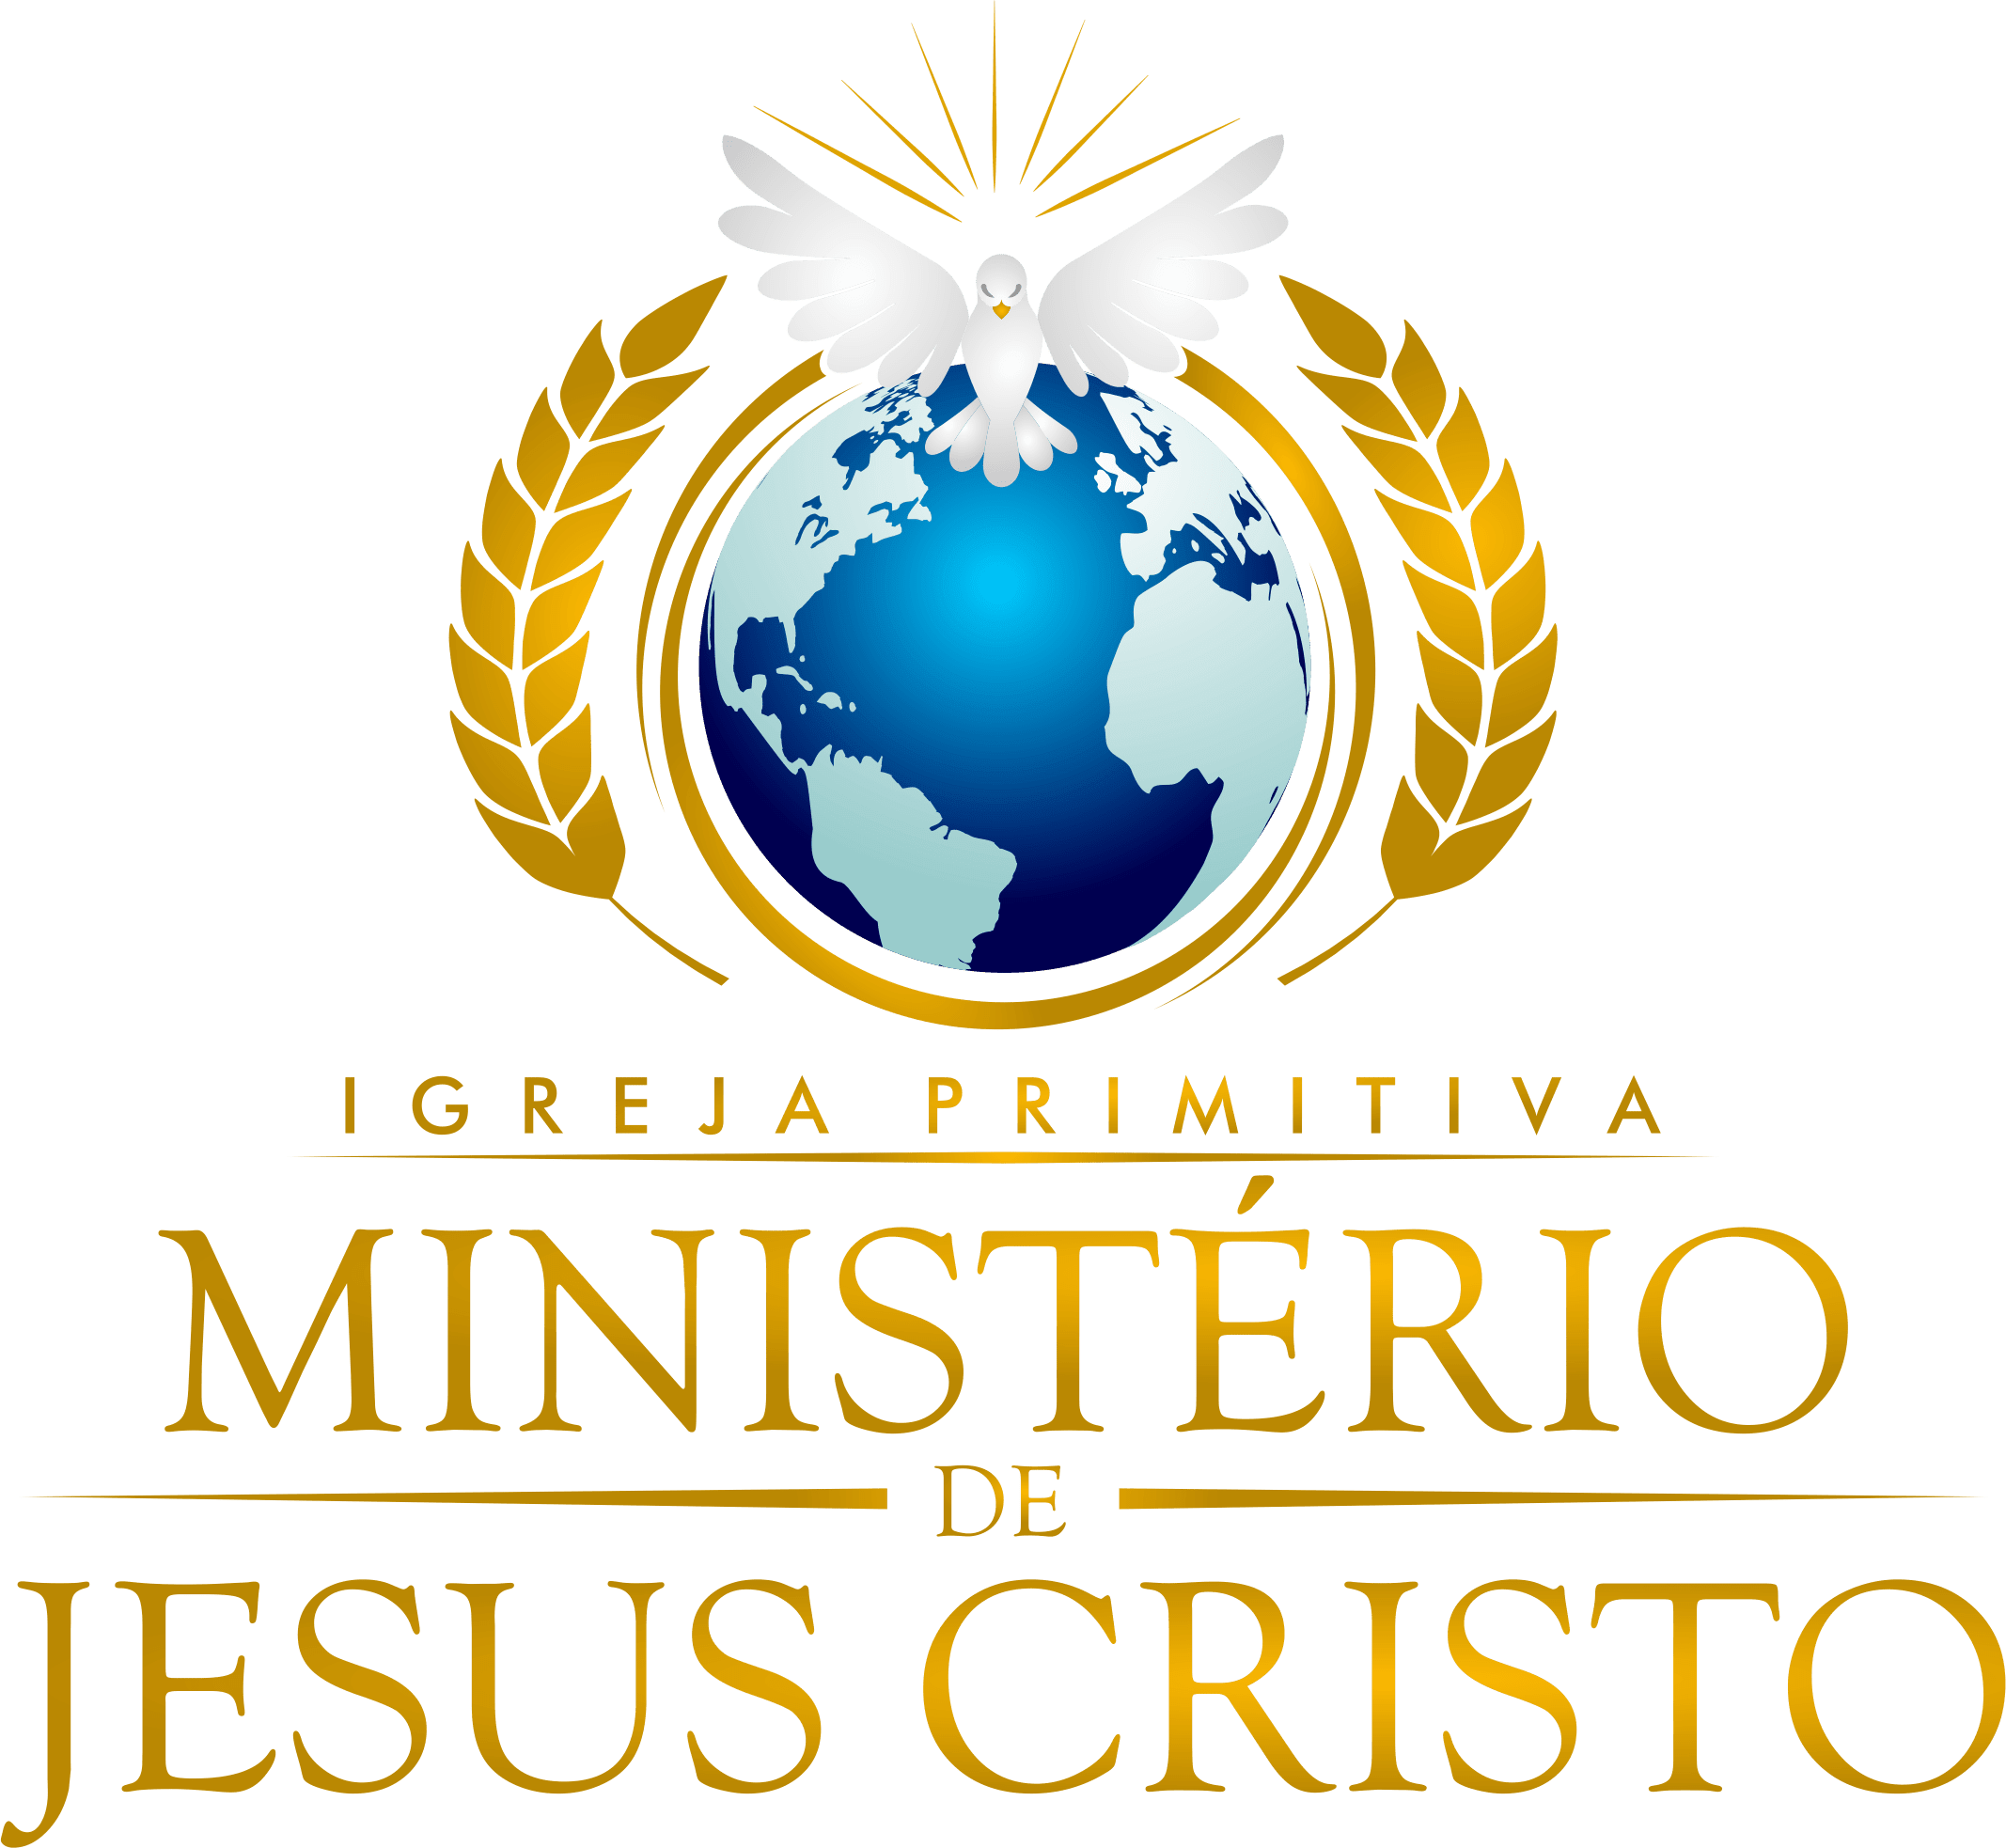 IGREJA PRIMITIVA-MINISTÉRIO DE JESUS CRISTO